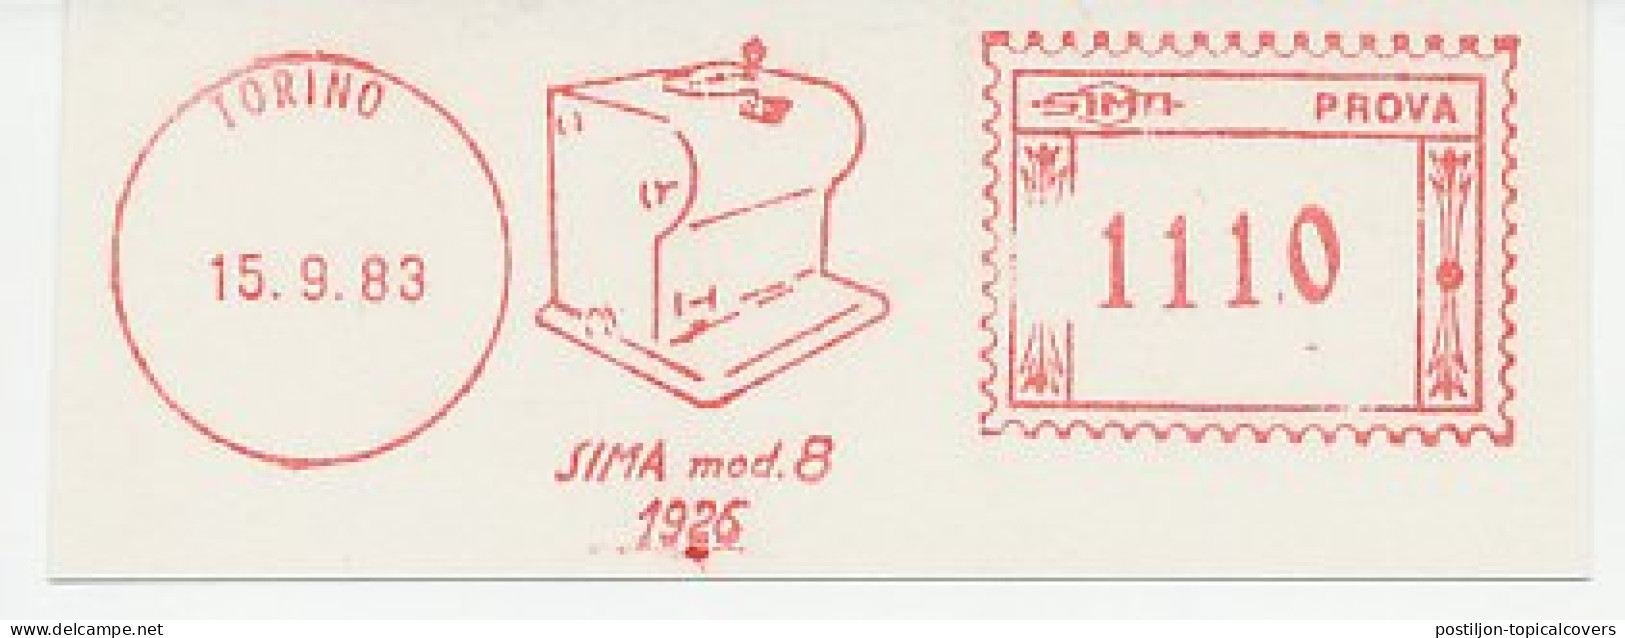 Proof Meter Cut Italy 1983 Sima - Mod. 8 1926 - Timbres De Distributeurs [ATM]